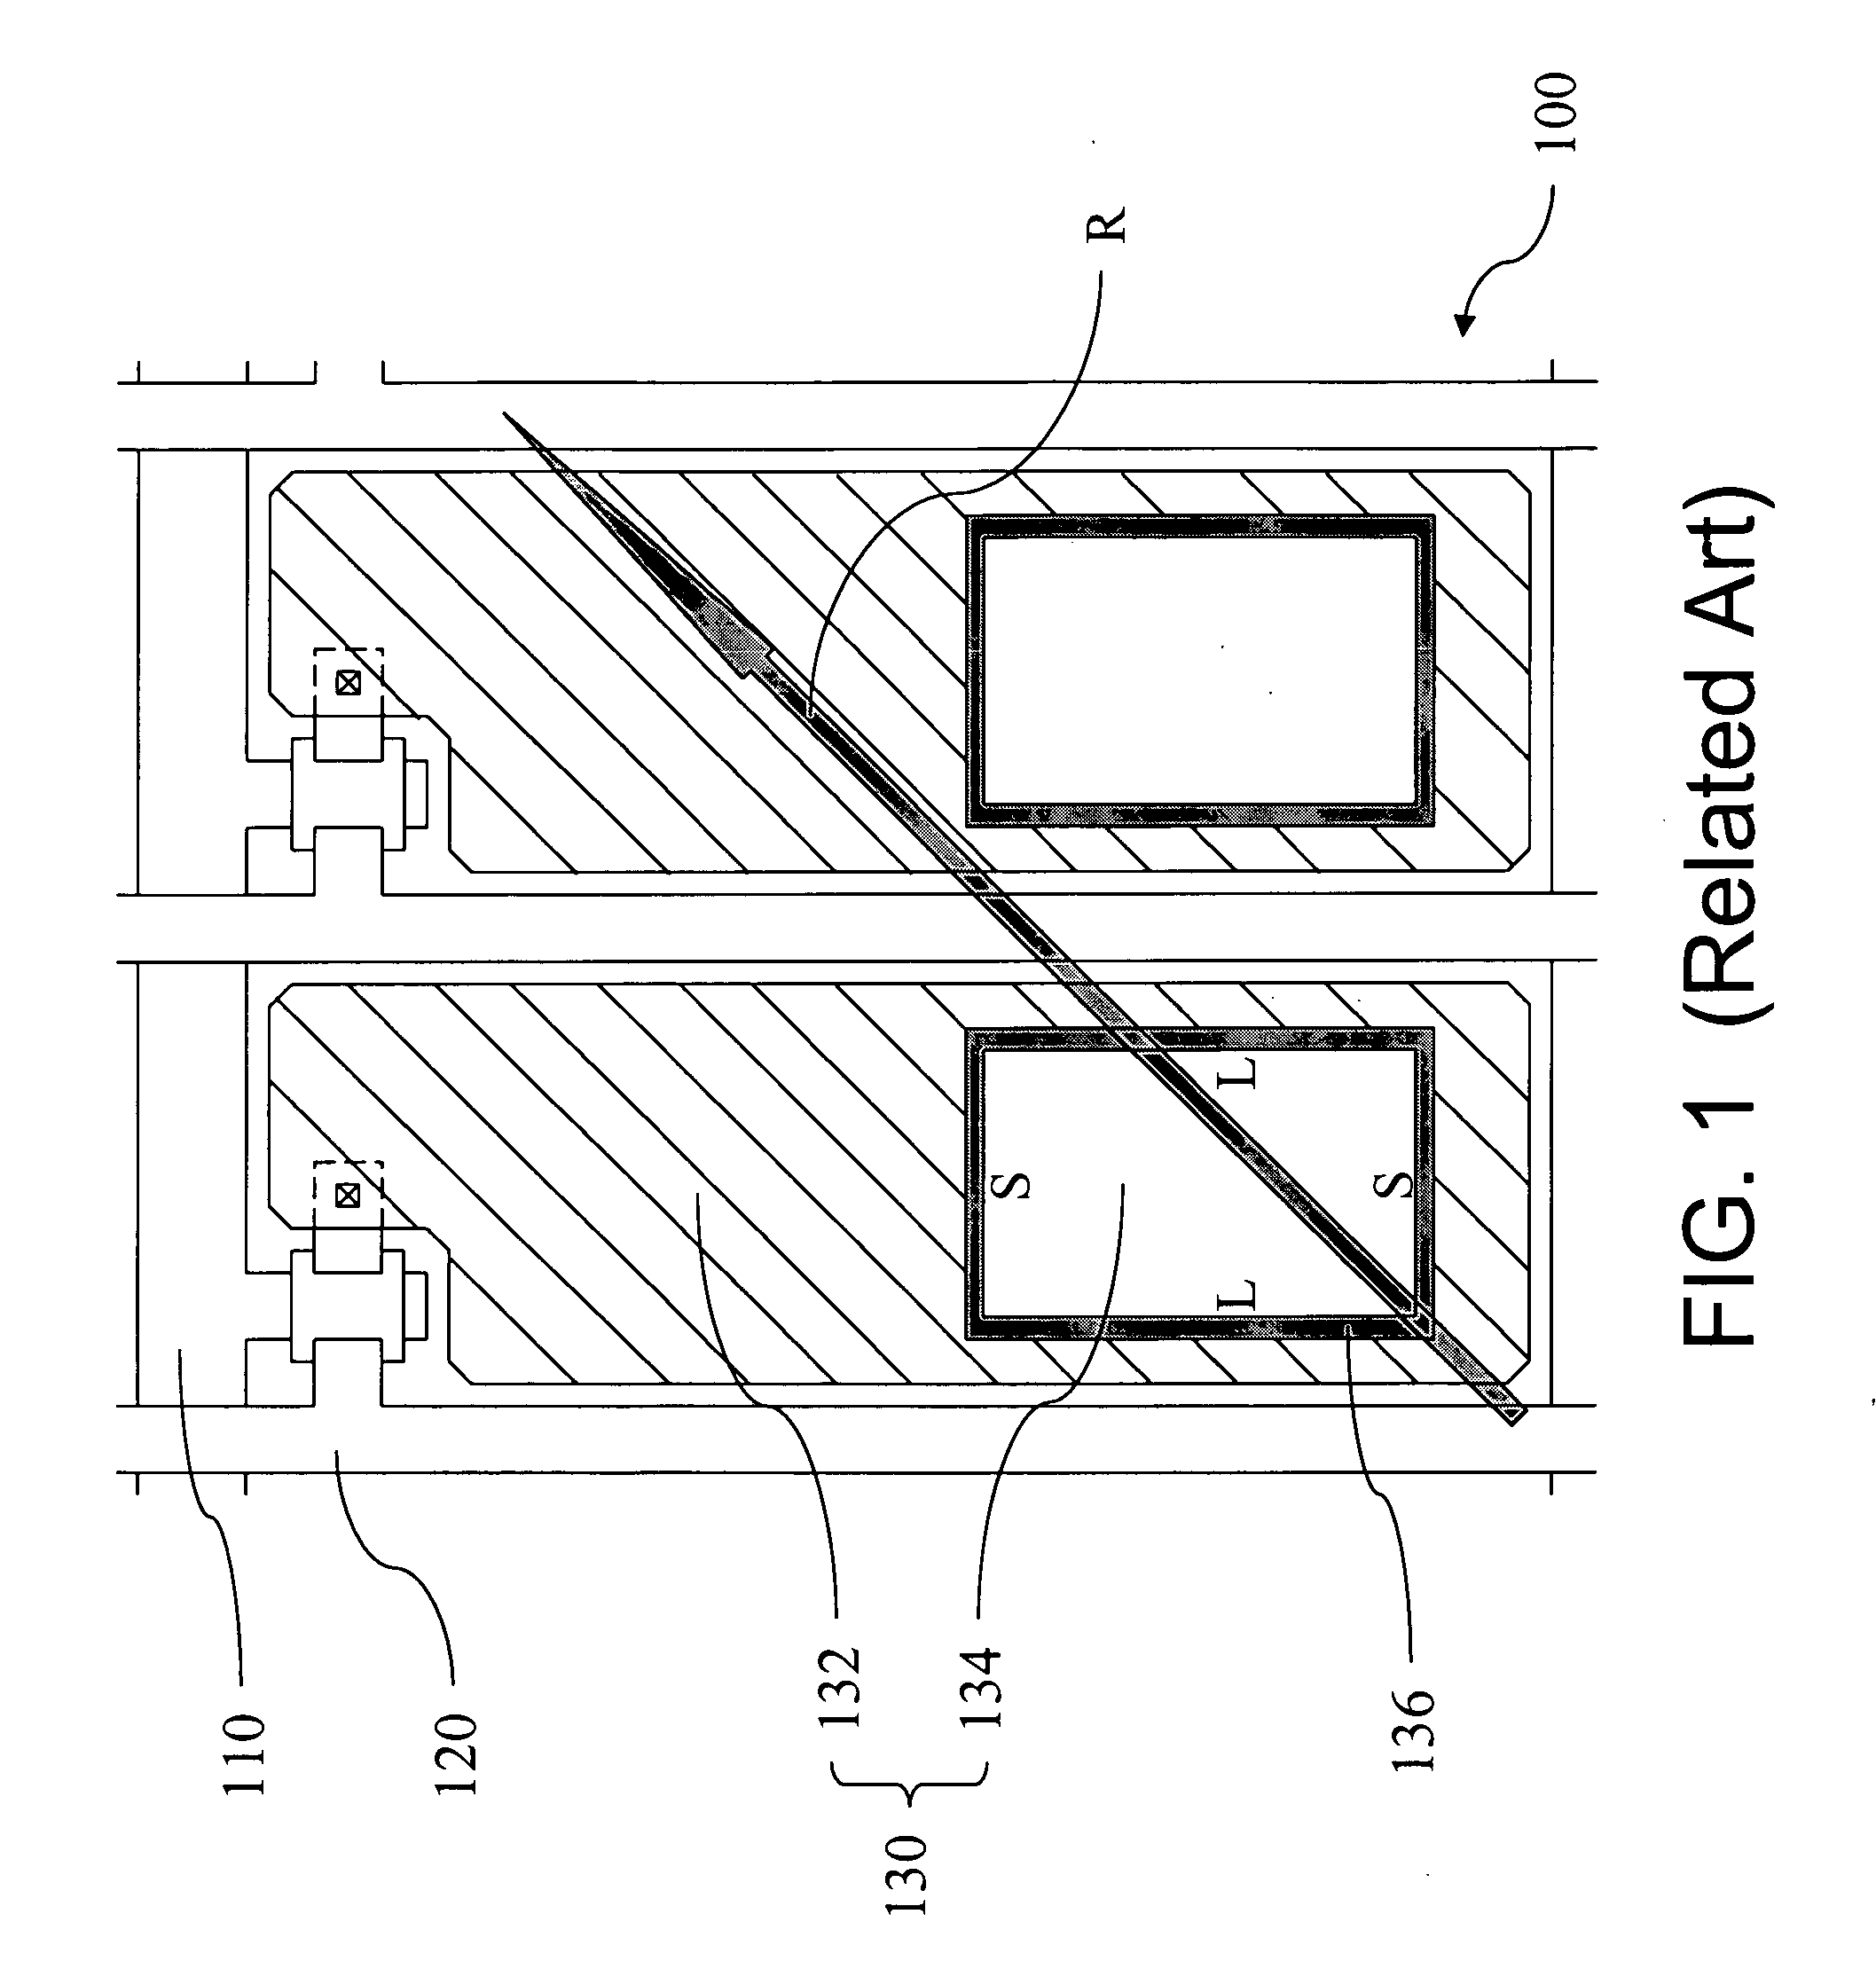 Thin film transistor array and transflective liquid crystal display panel